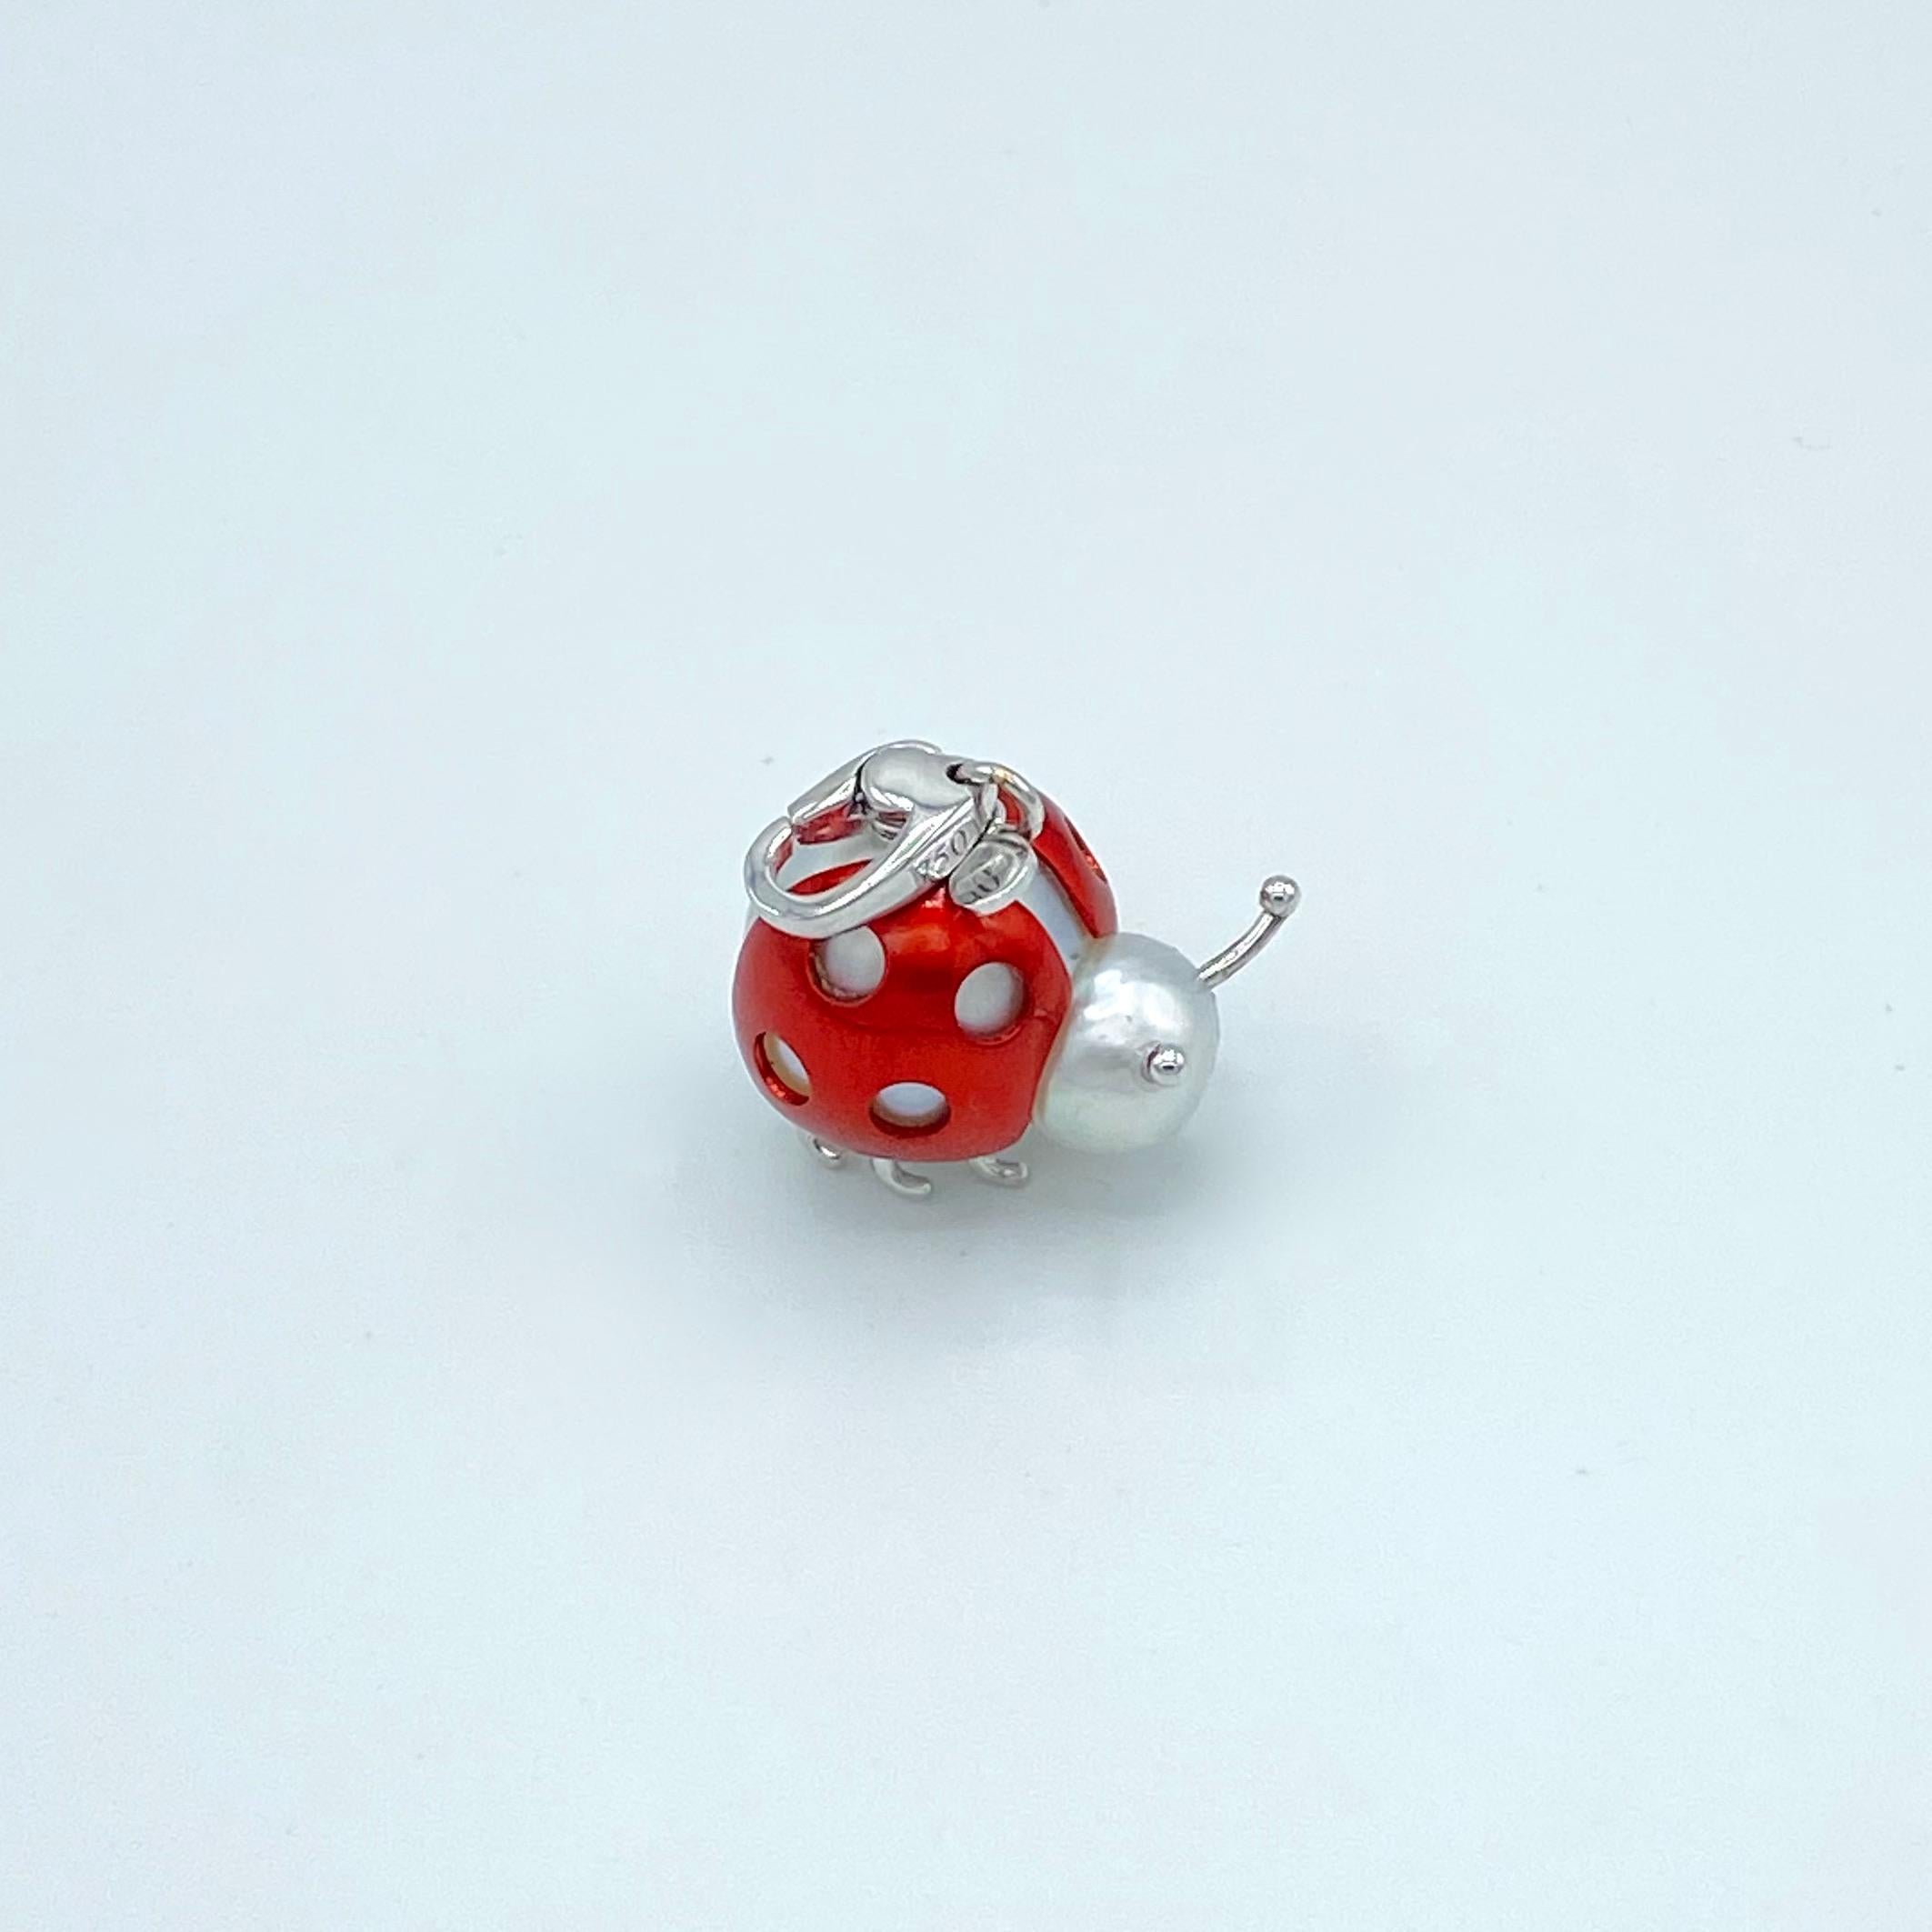 Ladybug or Ladybird 18 Karat Gold Australian Pearl Pendant Necklace or Charm 4